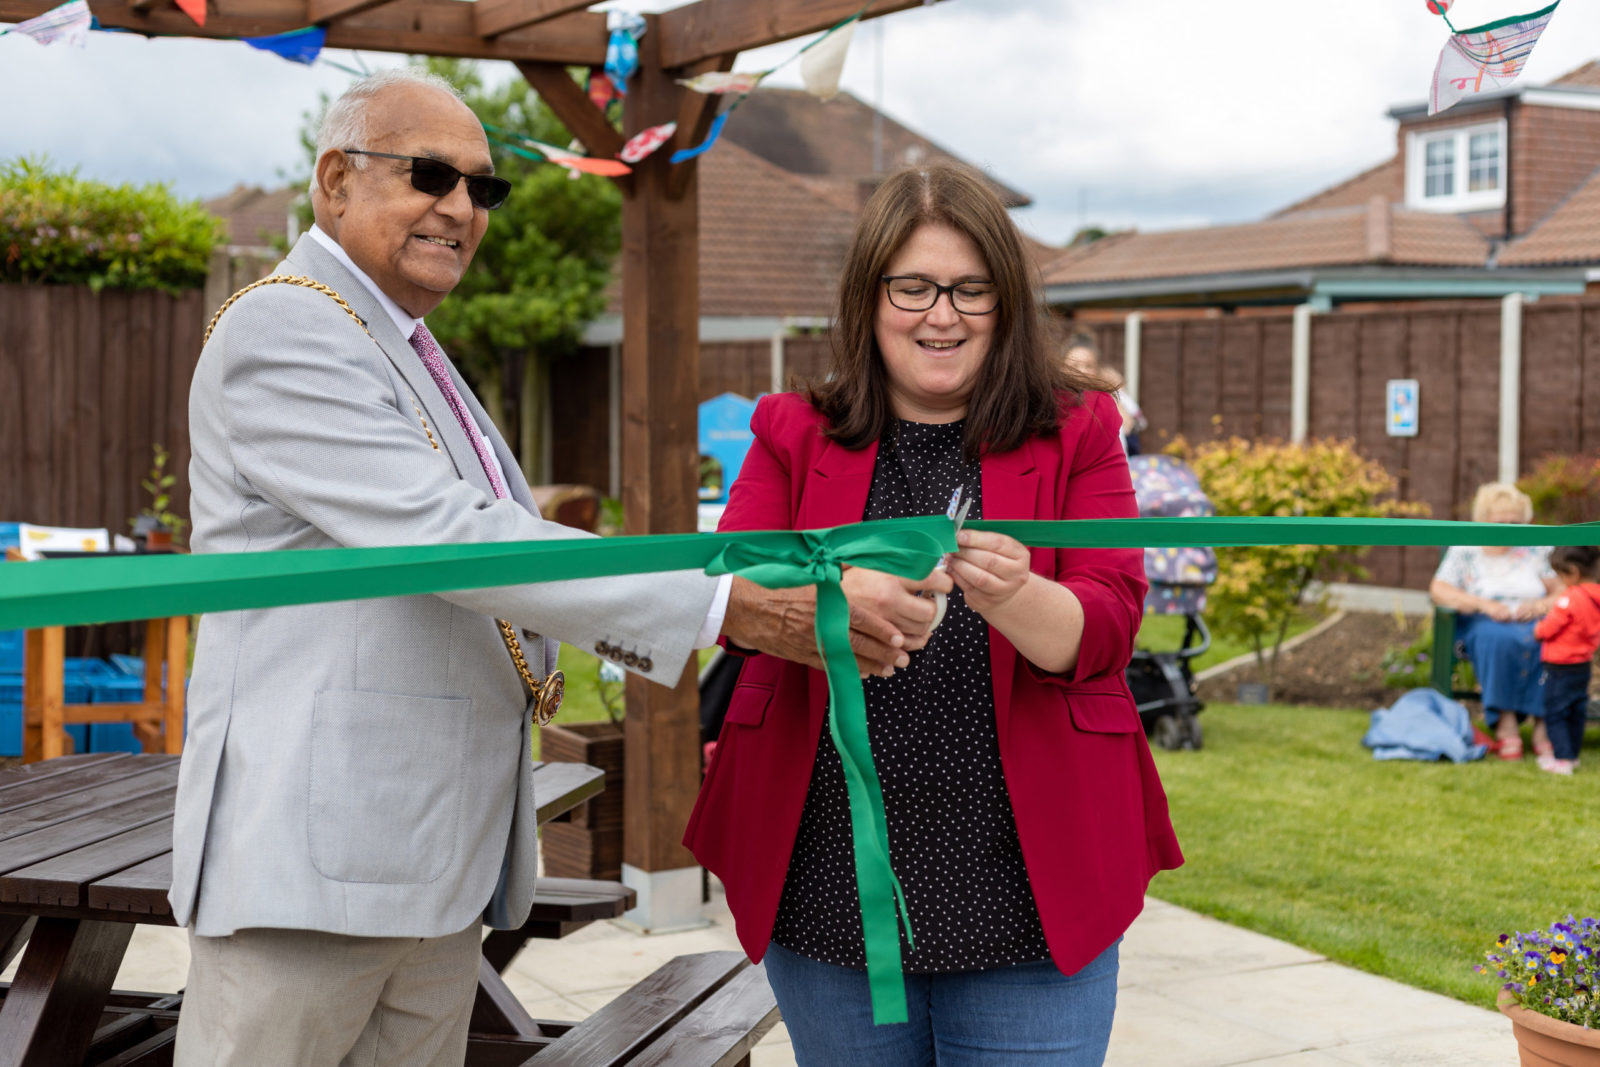 Rachel and Cllr Hussain Mayor of Luton cutting a green ribbon